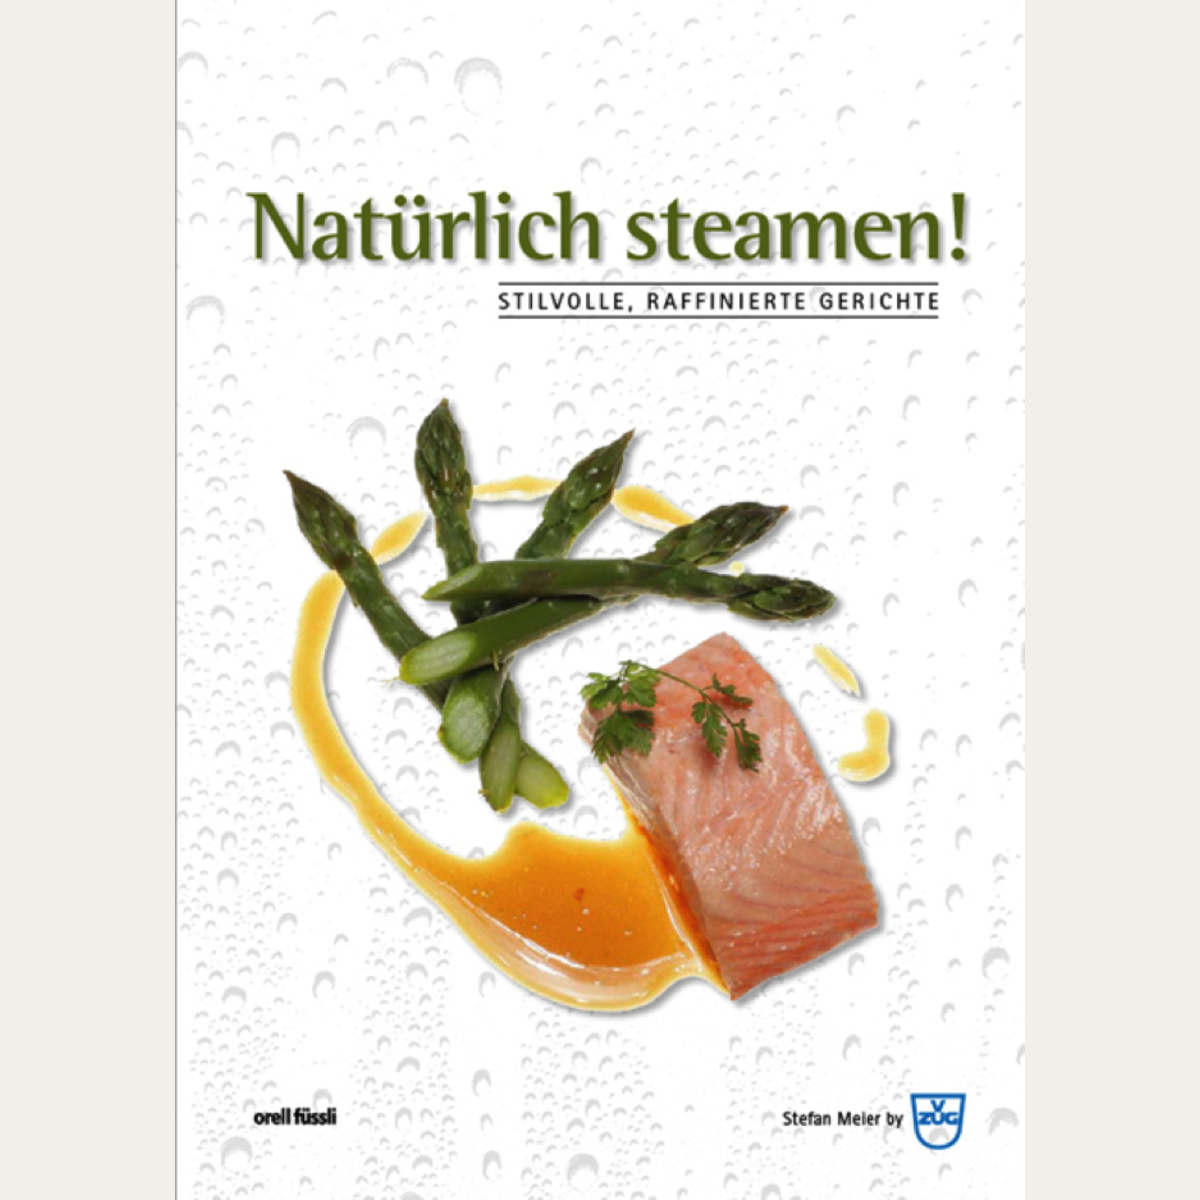 Ricettario per cottura «a vapore naturale» die Stefan Meier, tedesco